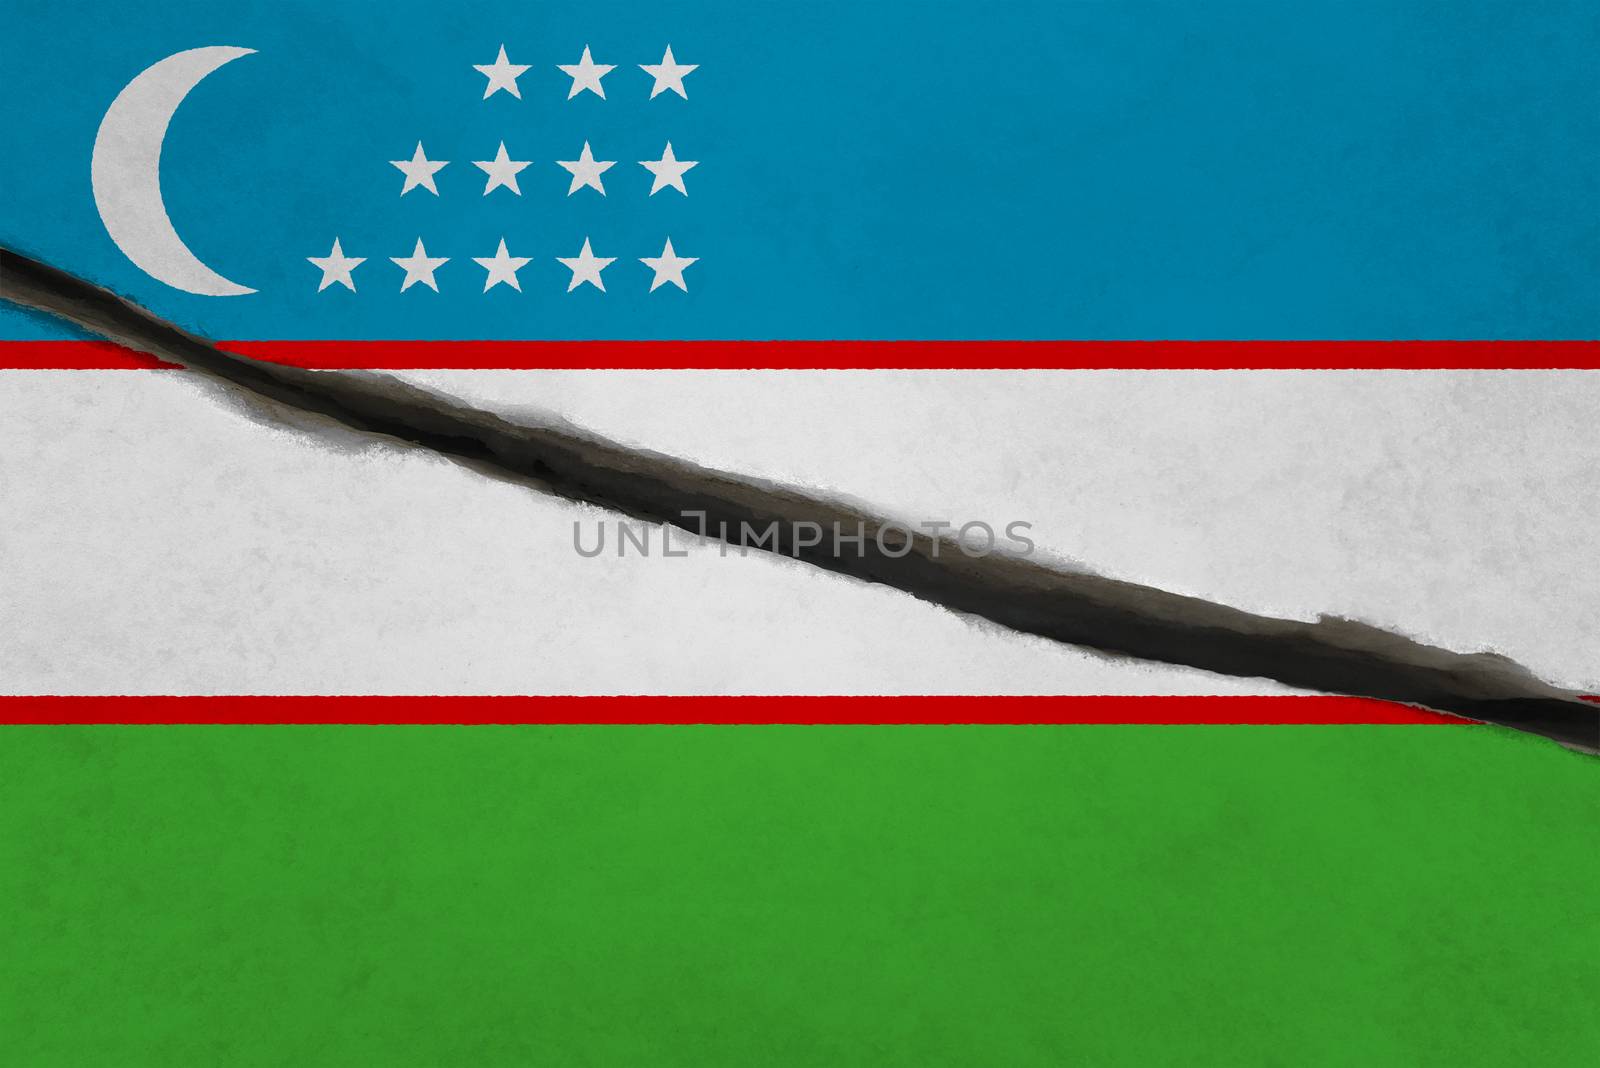 Uzbekistan flag cracked by Visual-Content